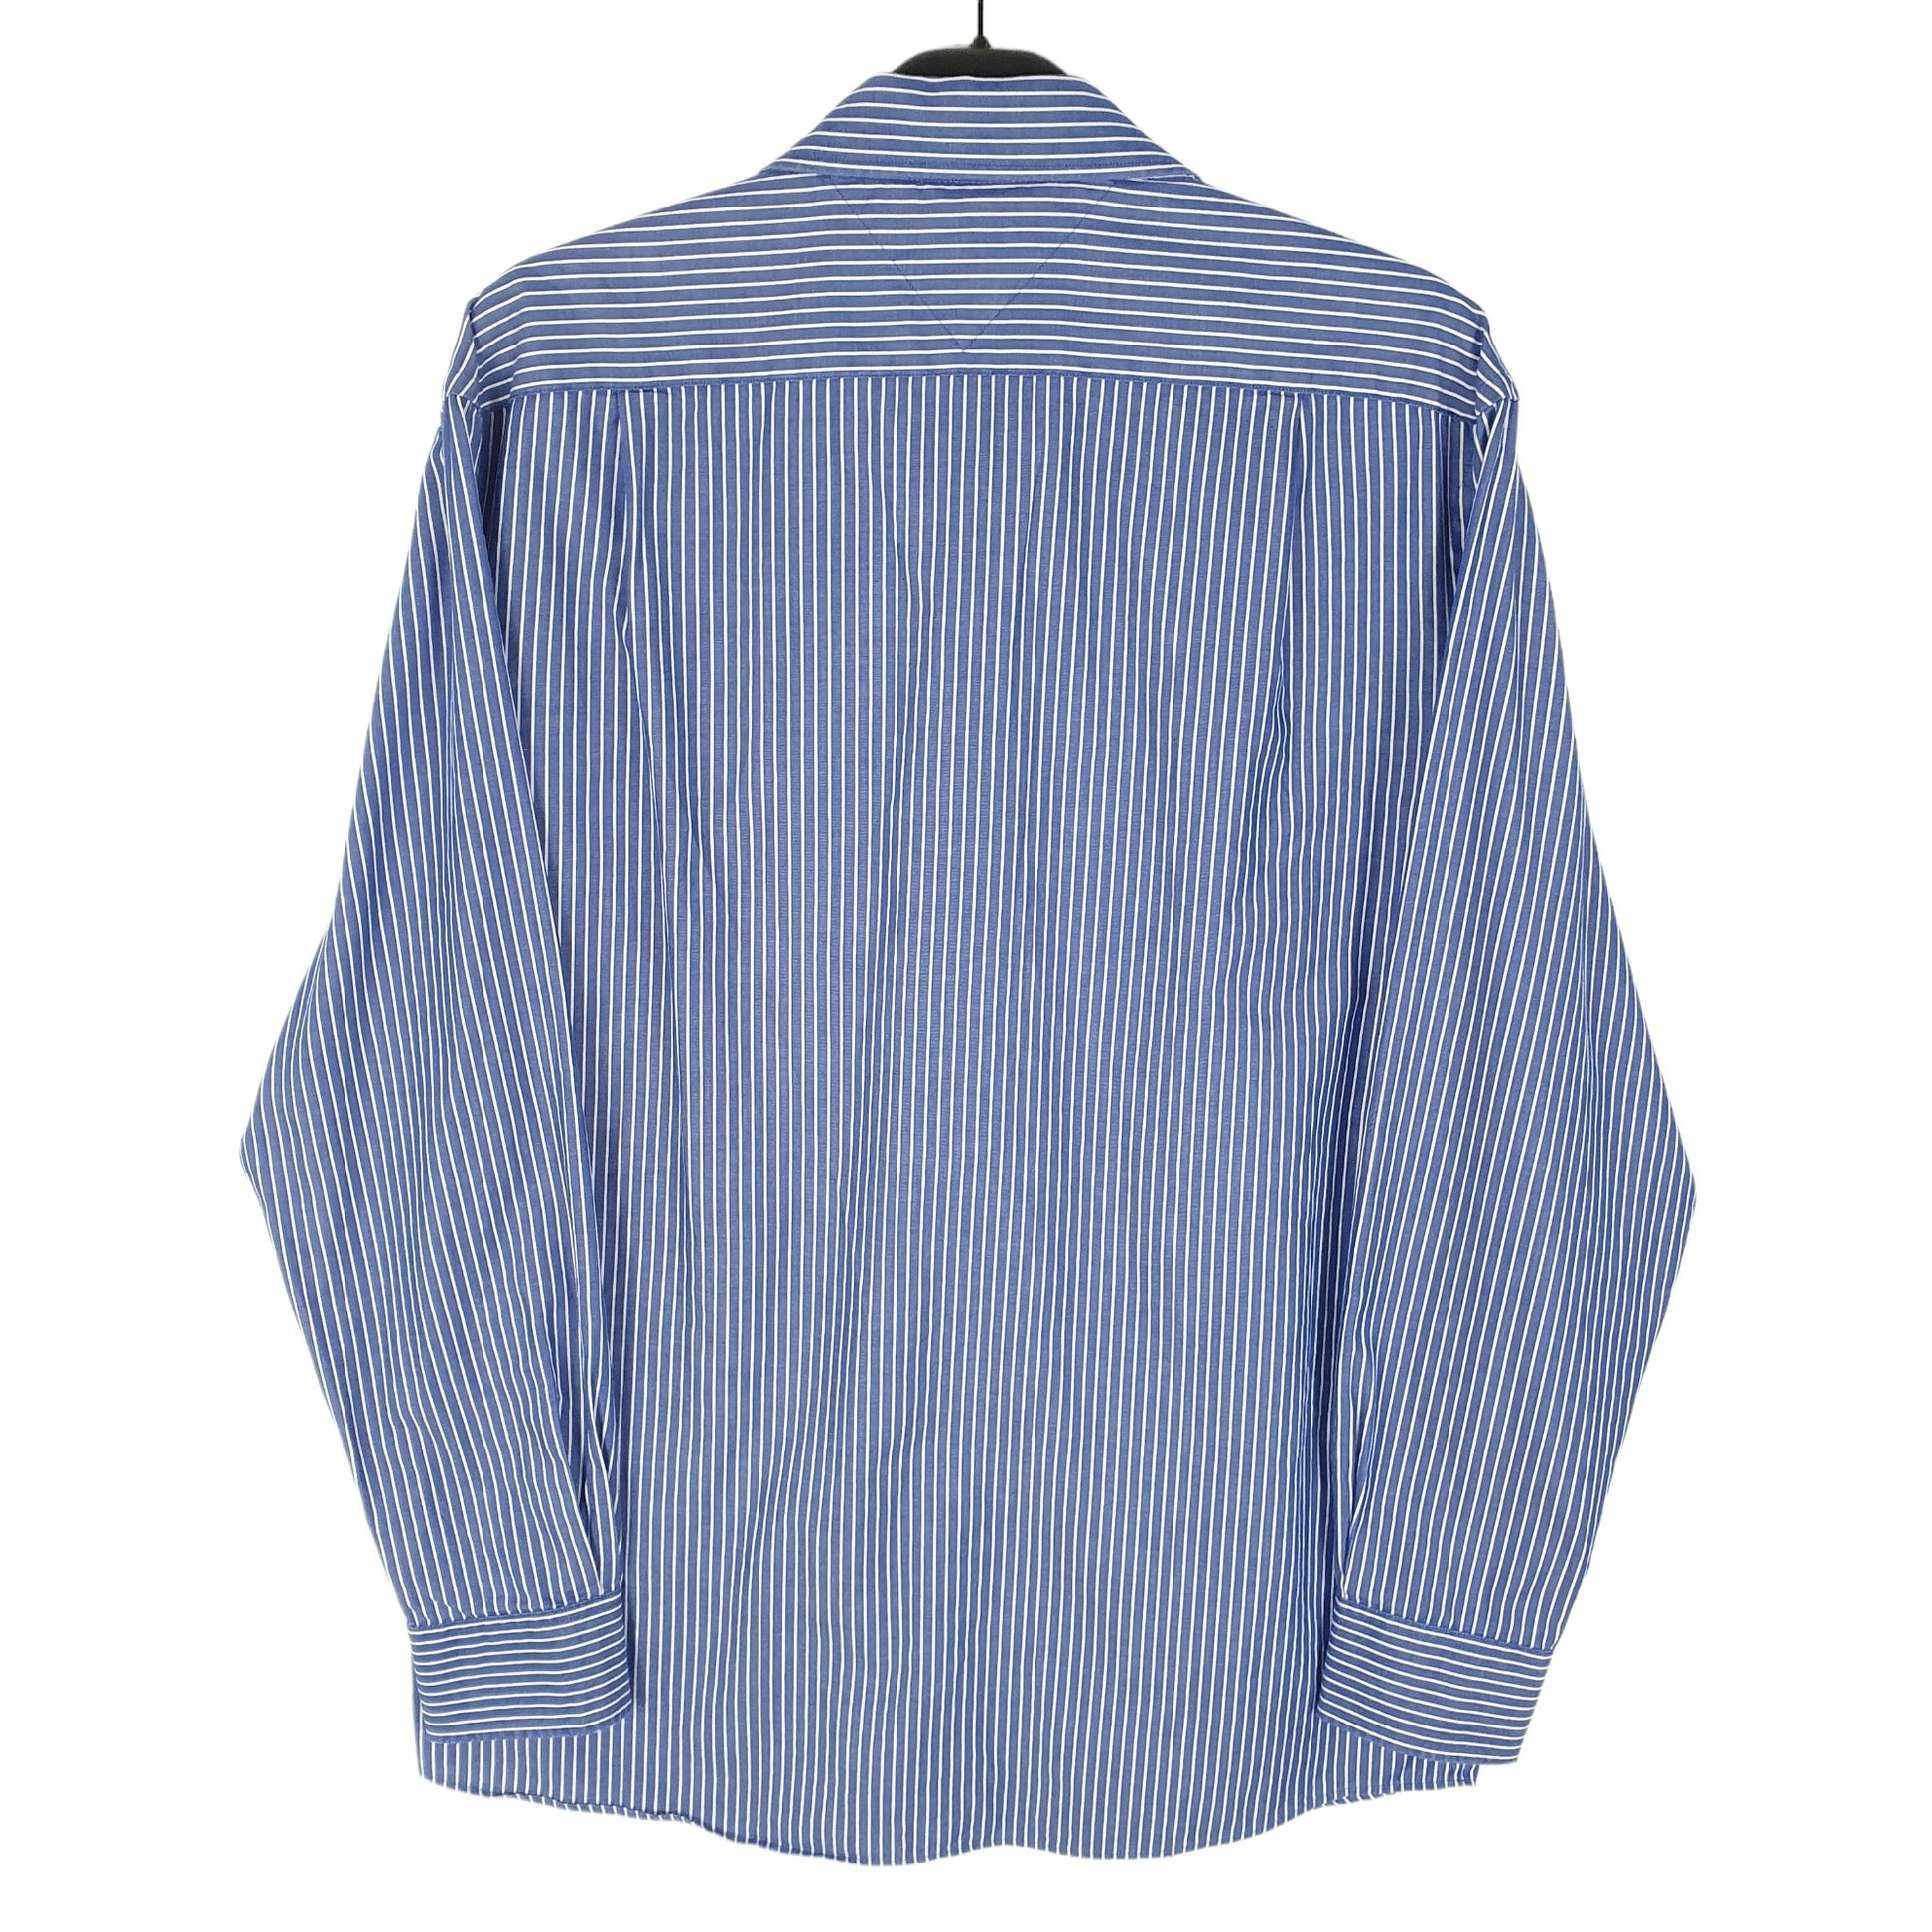 Tommy Hilfiger Long Sleeve Regular Fit Striped Shirt Blue